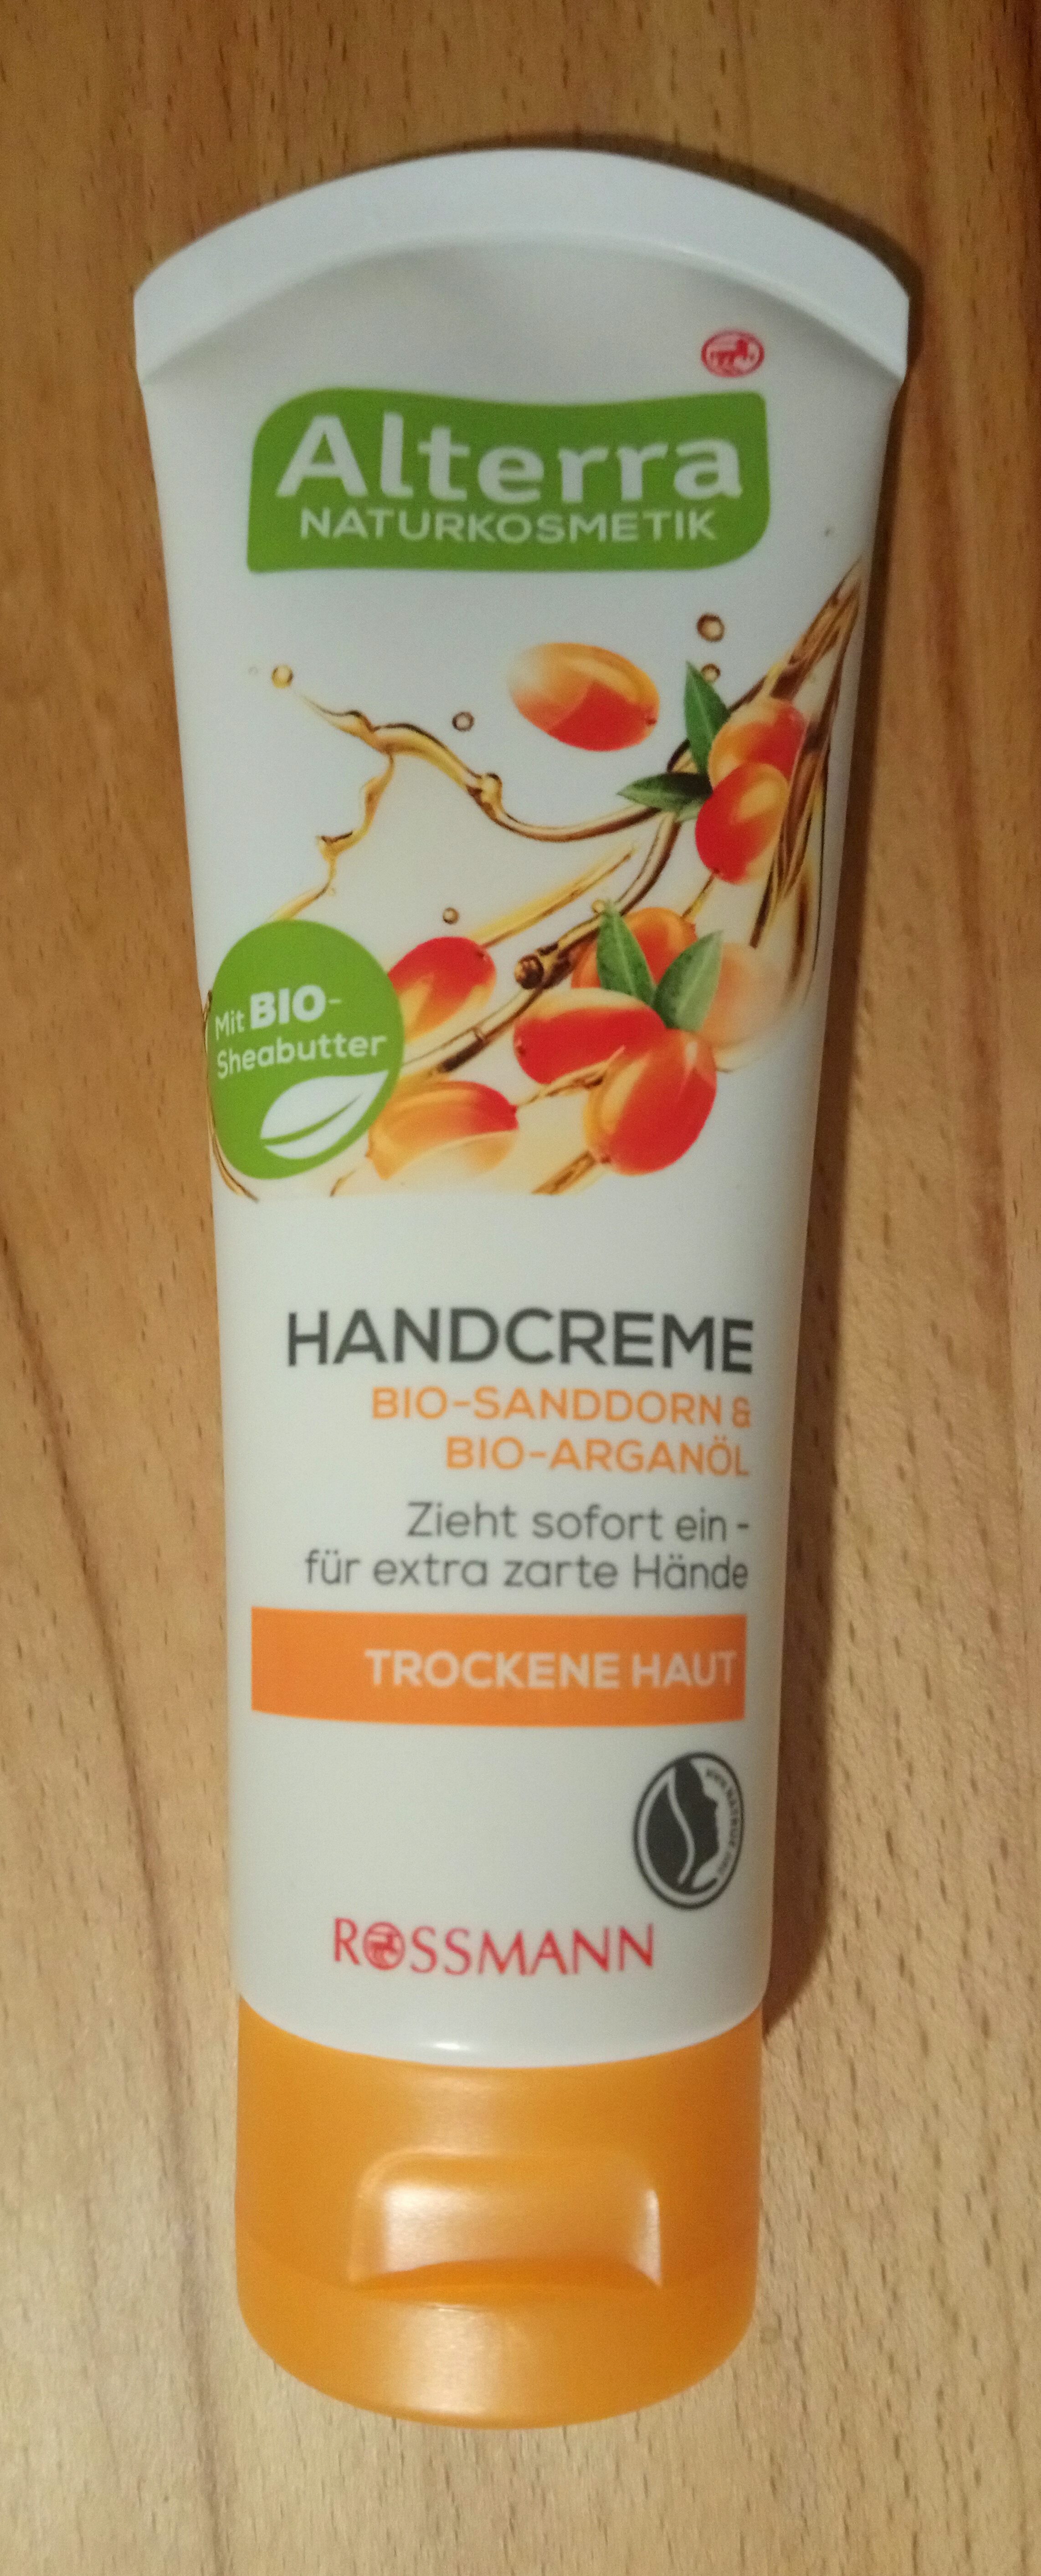 Handcreme Bio-Sanddorn & Bio-Arganöl - Produit - de